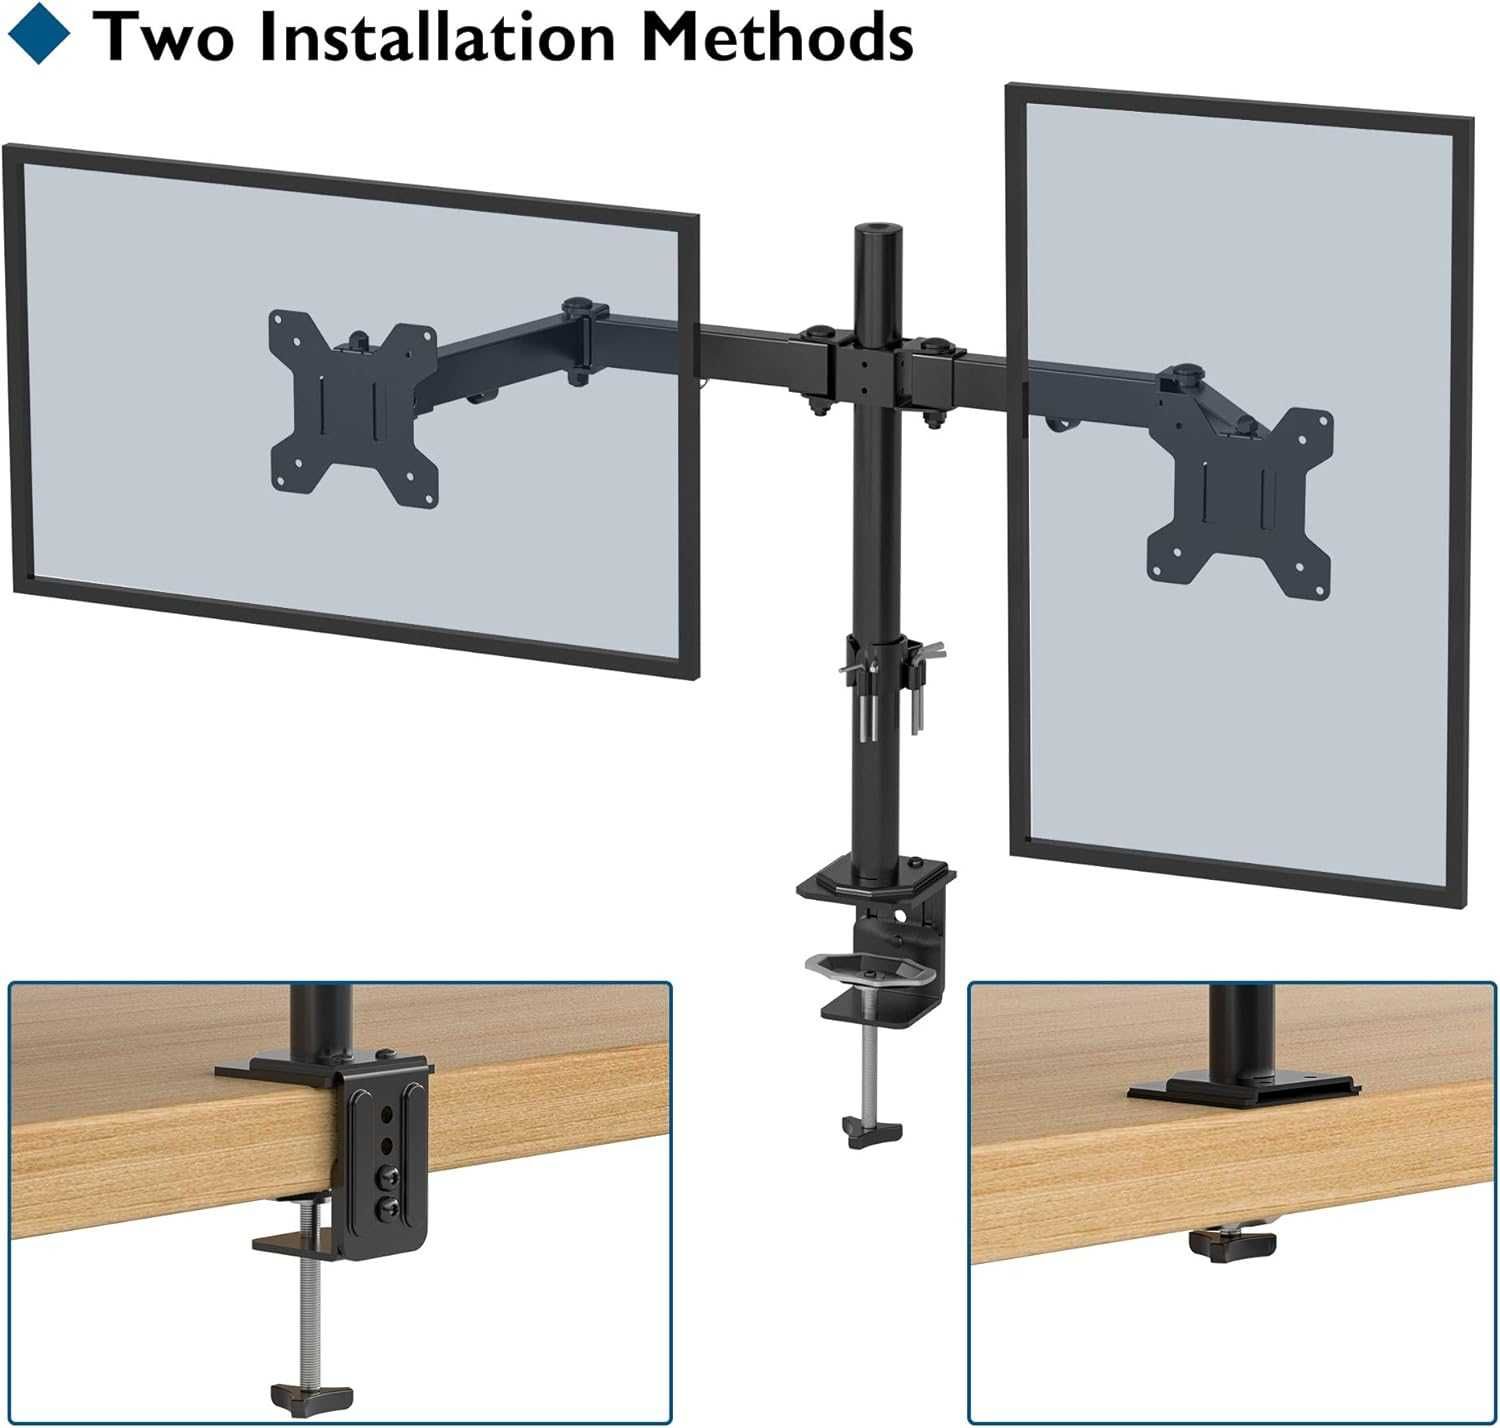 Suport dublu monitor 13-27 inchi max 8kg VESA 75x75-100x100mm